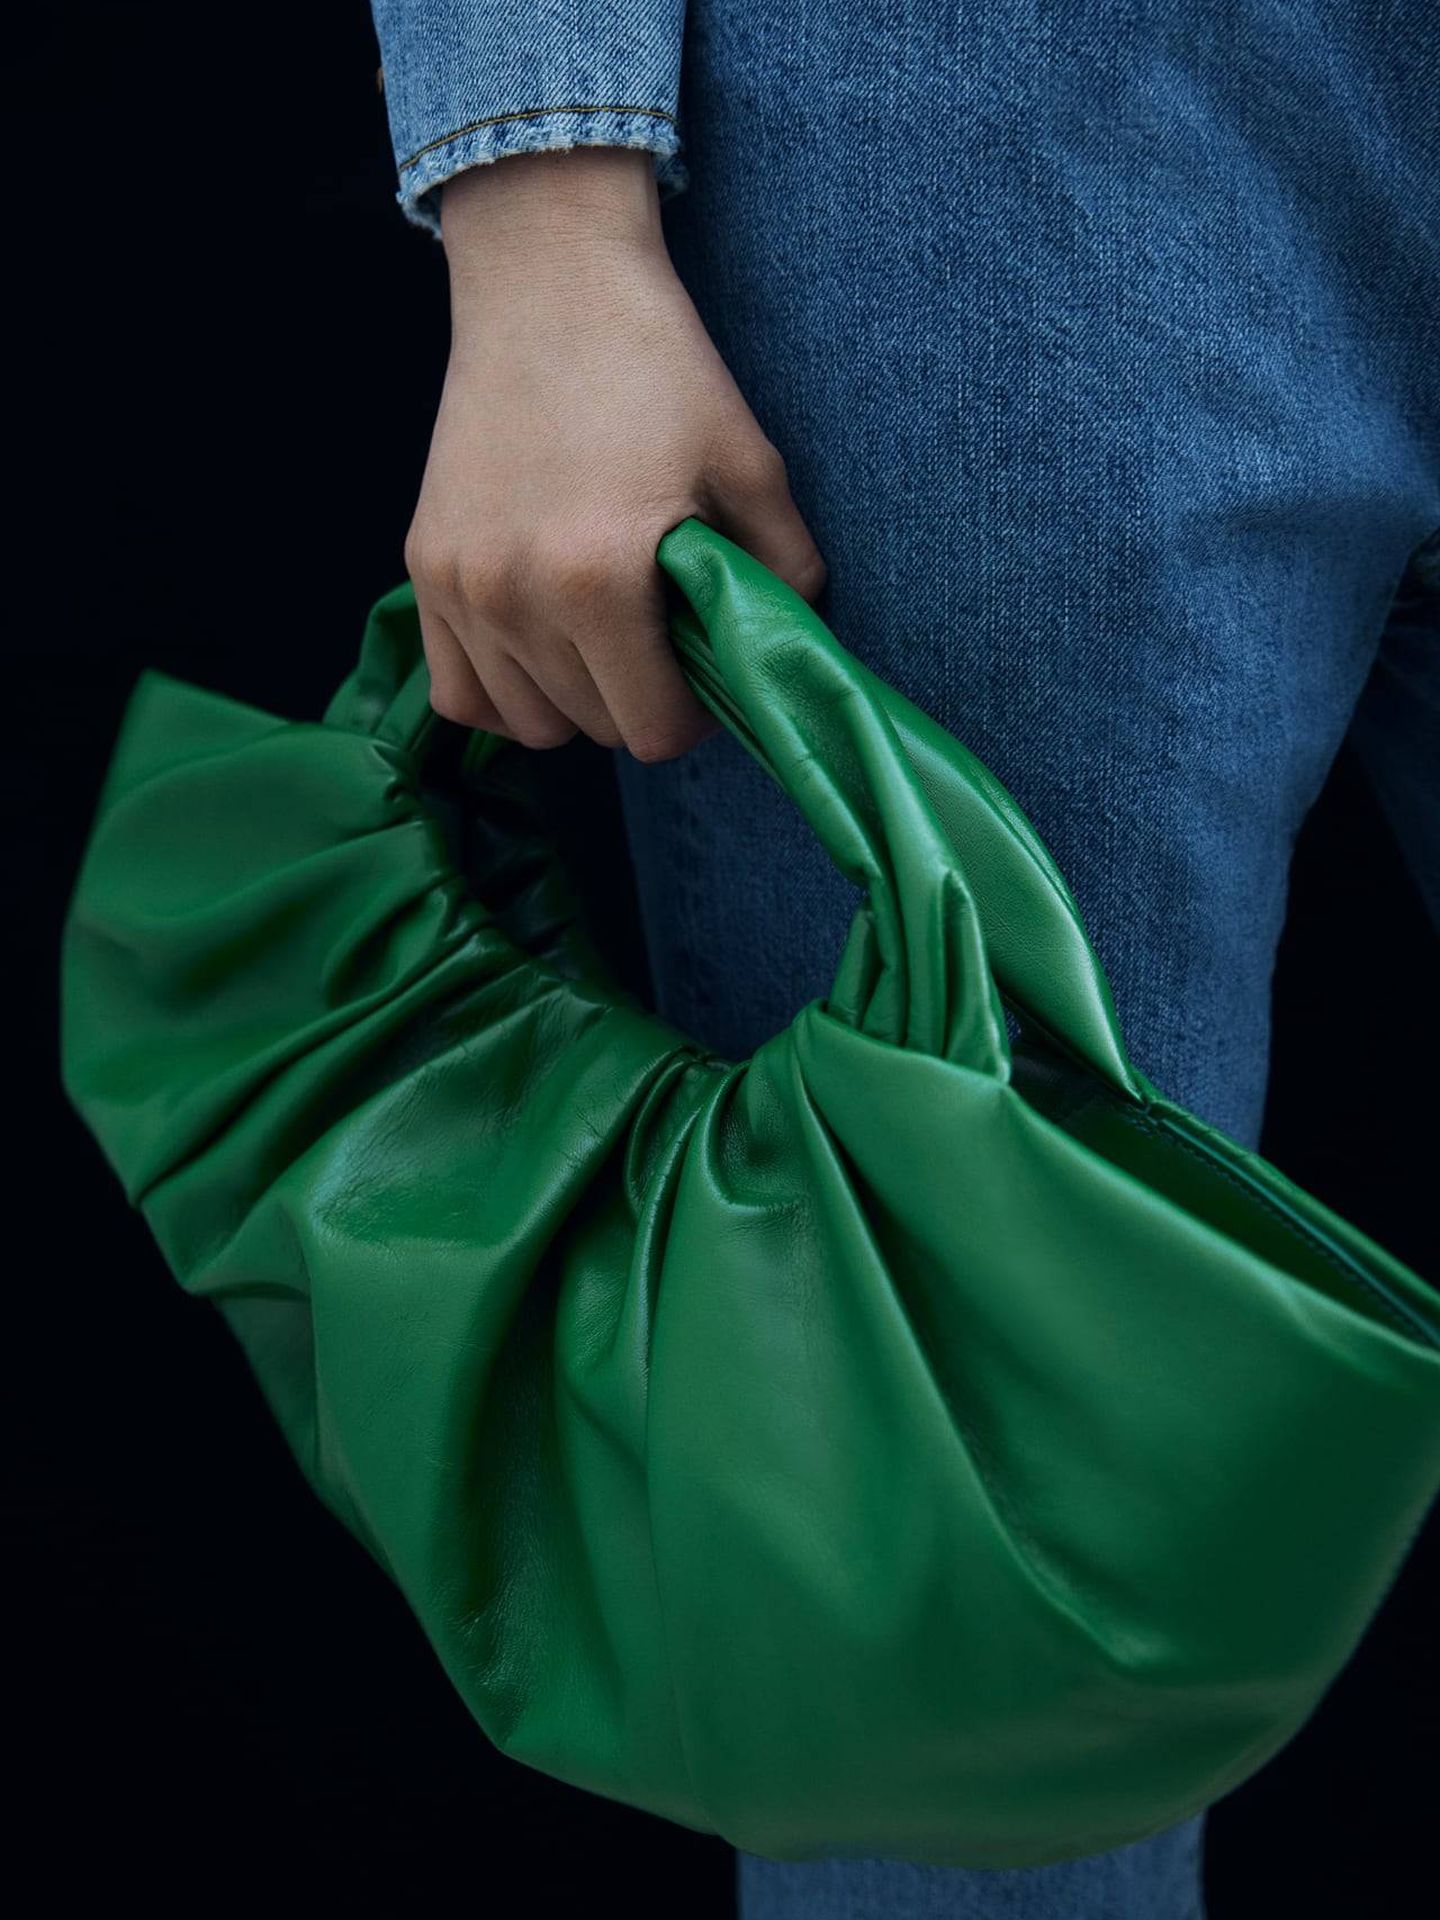 Bolso verde de Zara. (Cortesía)